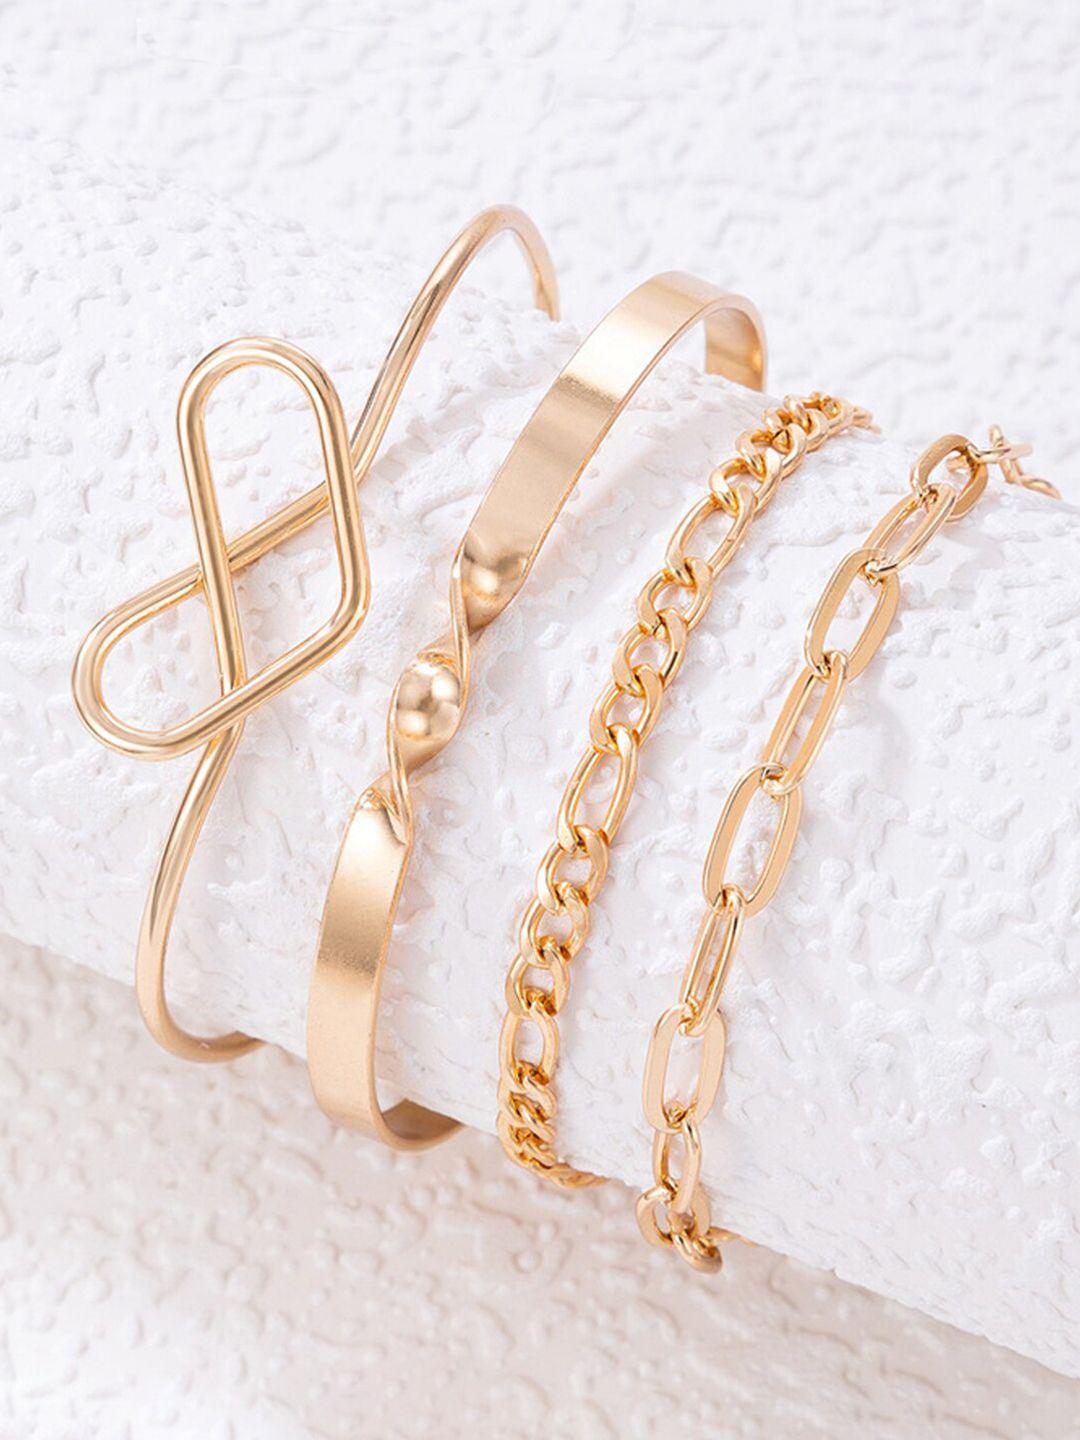 jewels galaxy women set of 4 gold-plated cuff bracelet